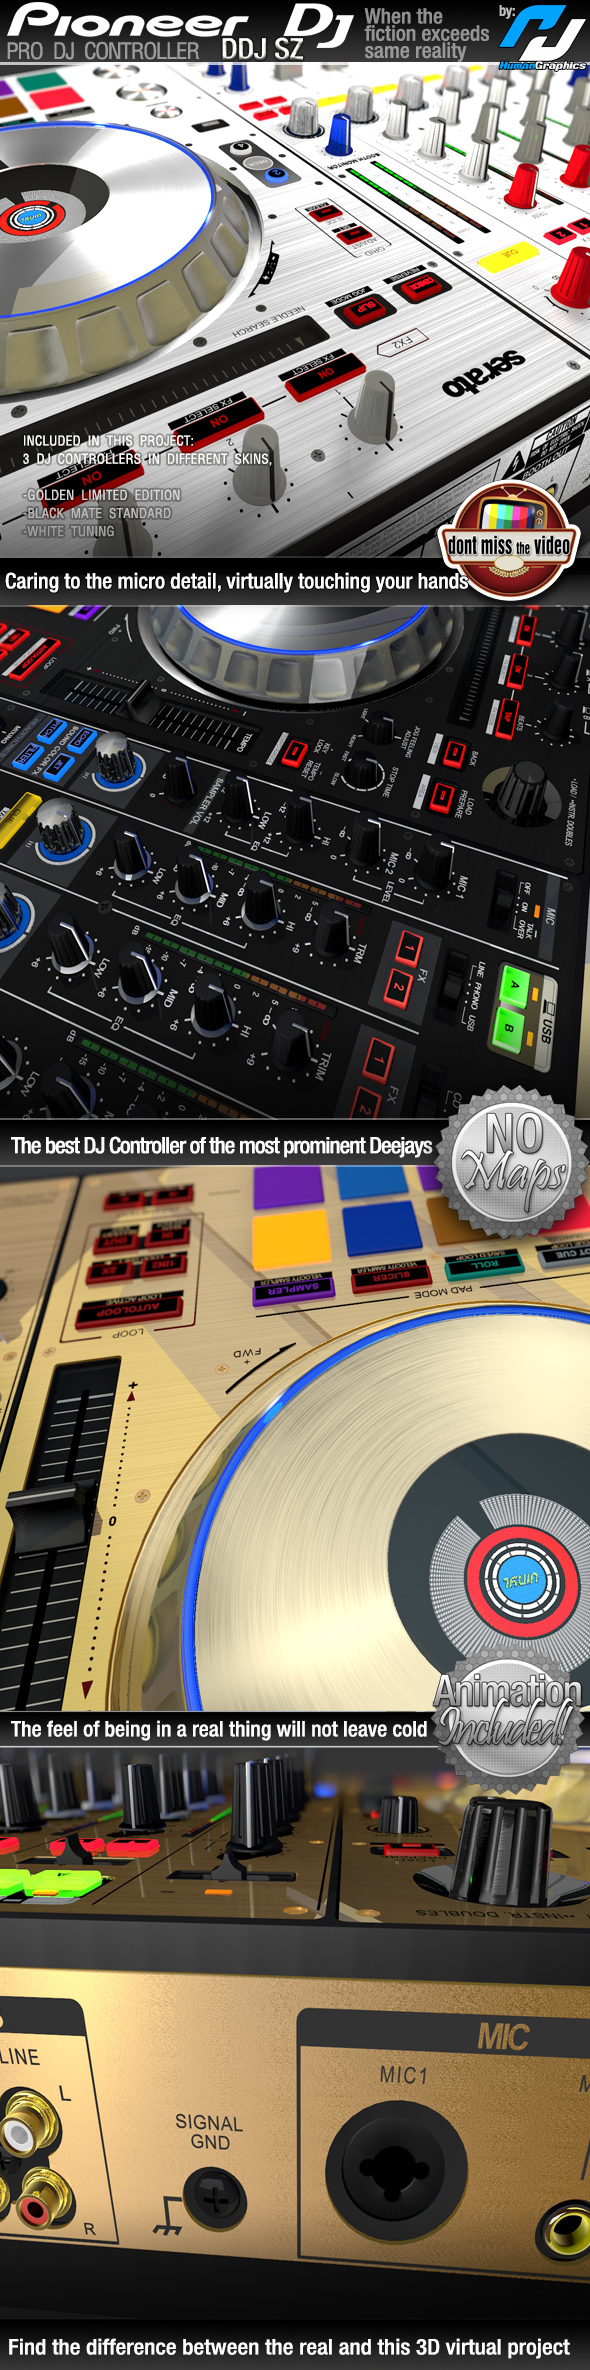 Realistic Pro DJ Controller Pioneer DDJ SZ, in 3 different skins